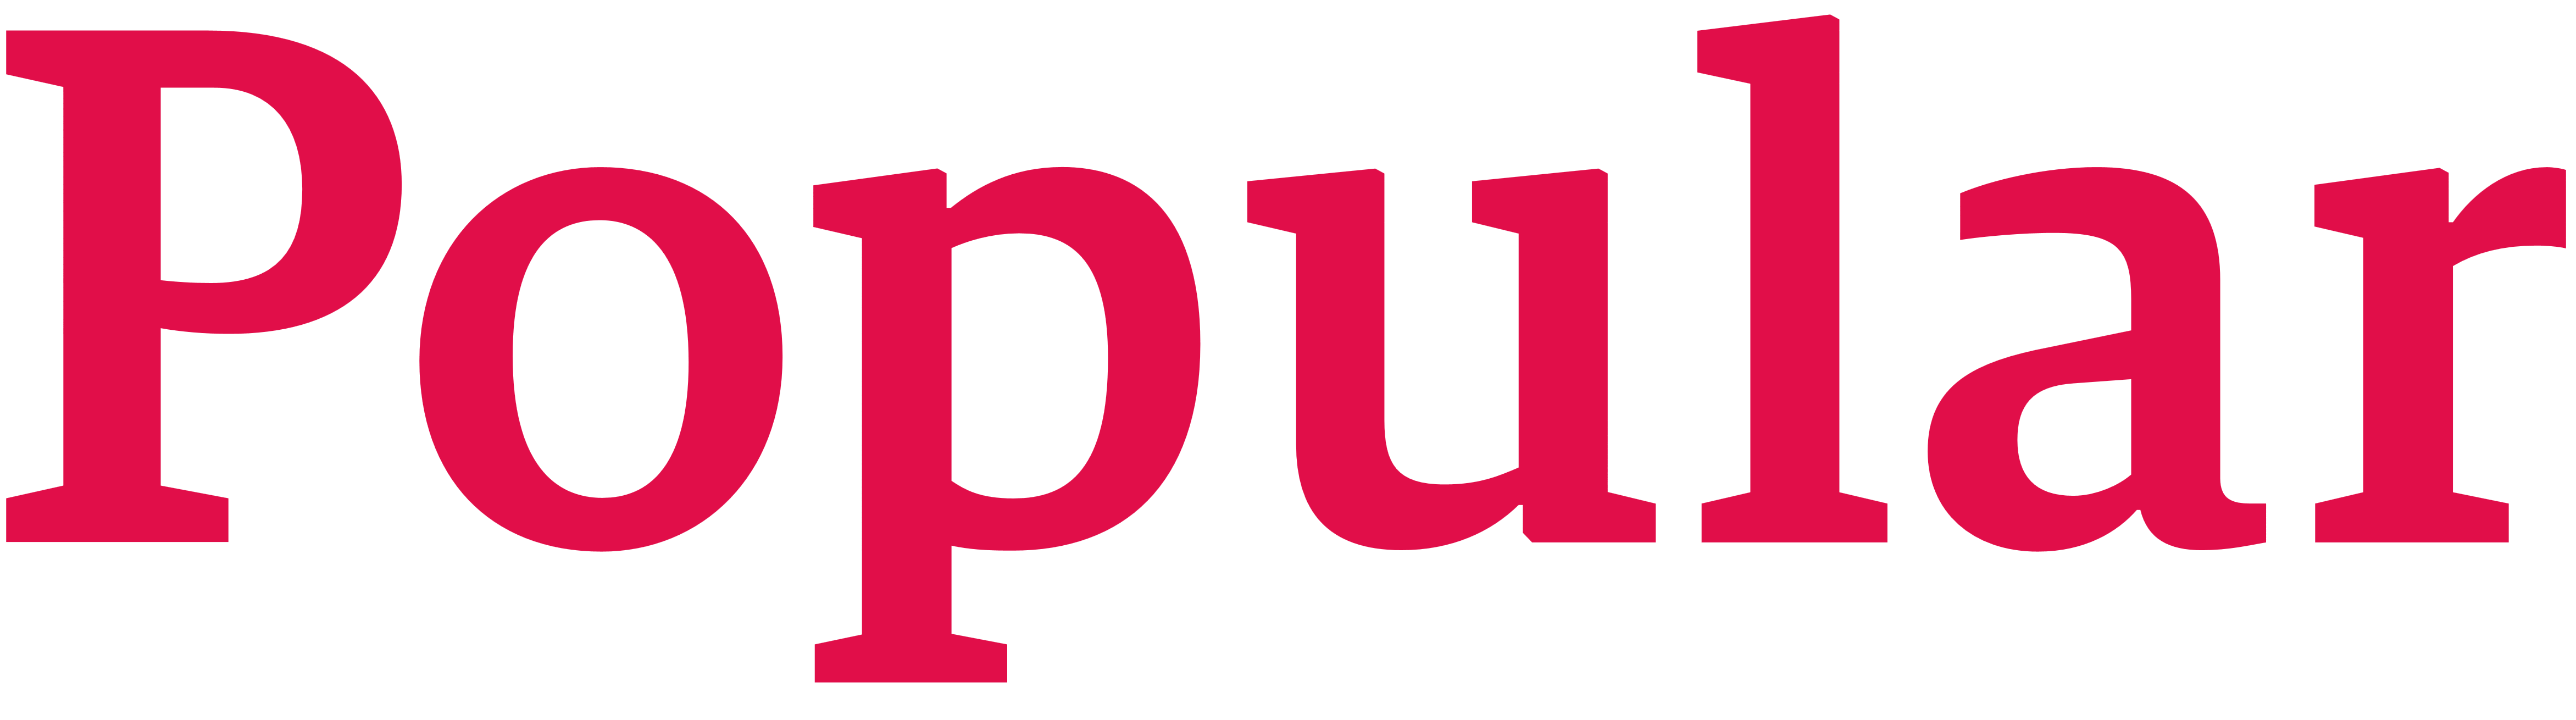 Banco Popular logo, logotype